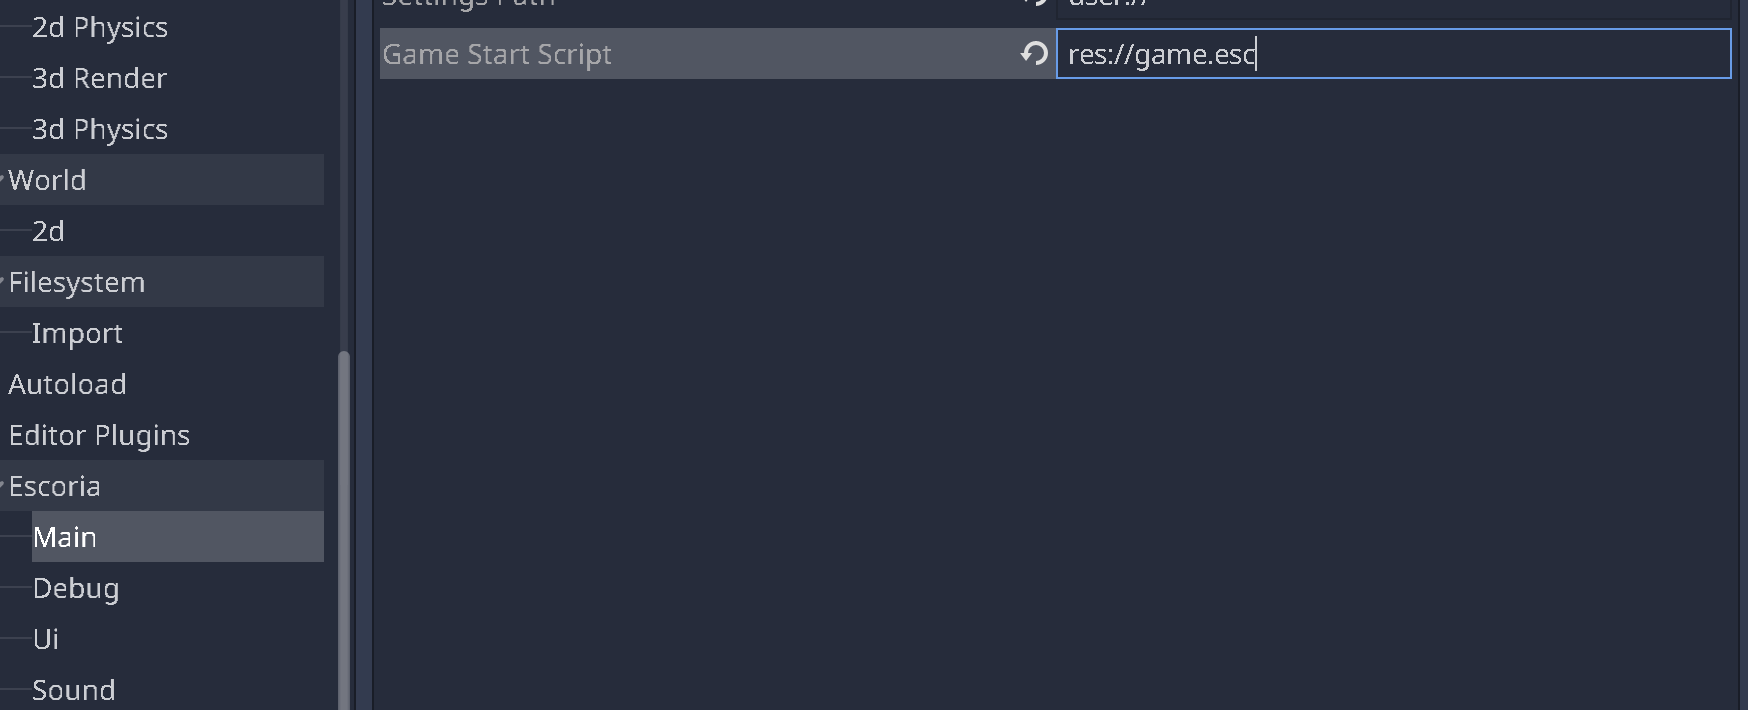 The parameter Game Start Script set to res://game.esc